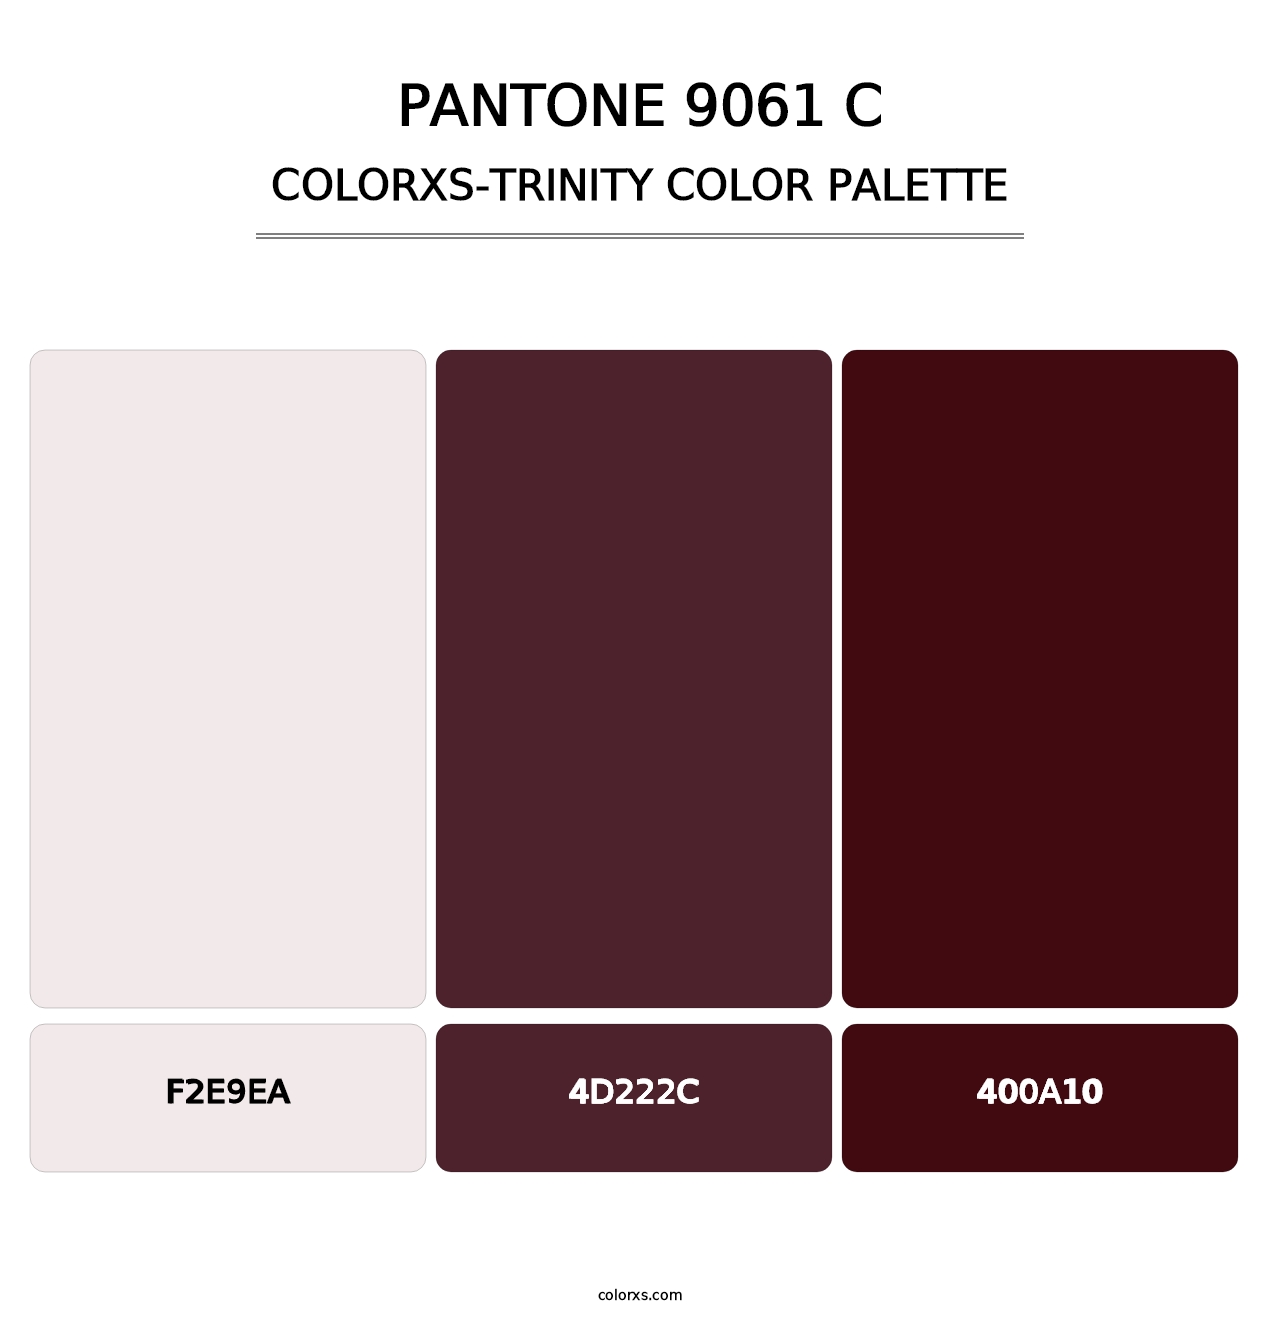 PANTONE 9061 C - Colorxs Trinity Palette